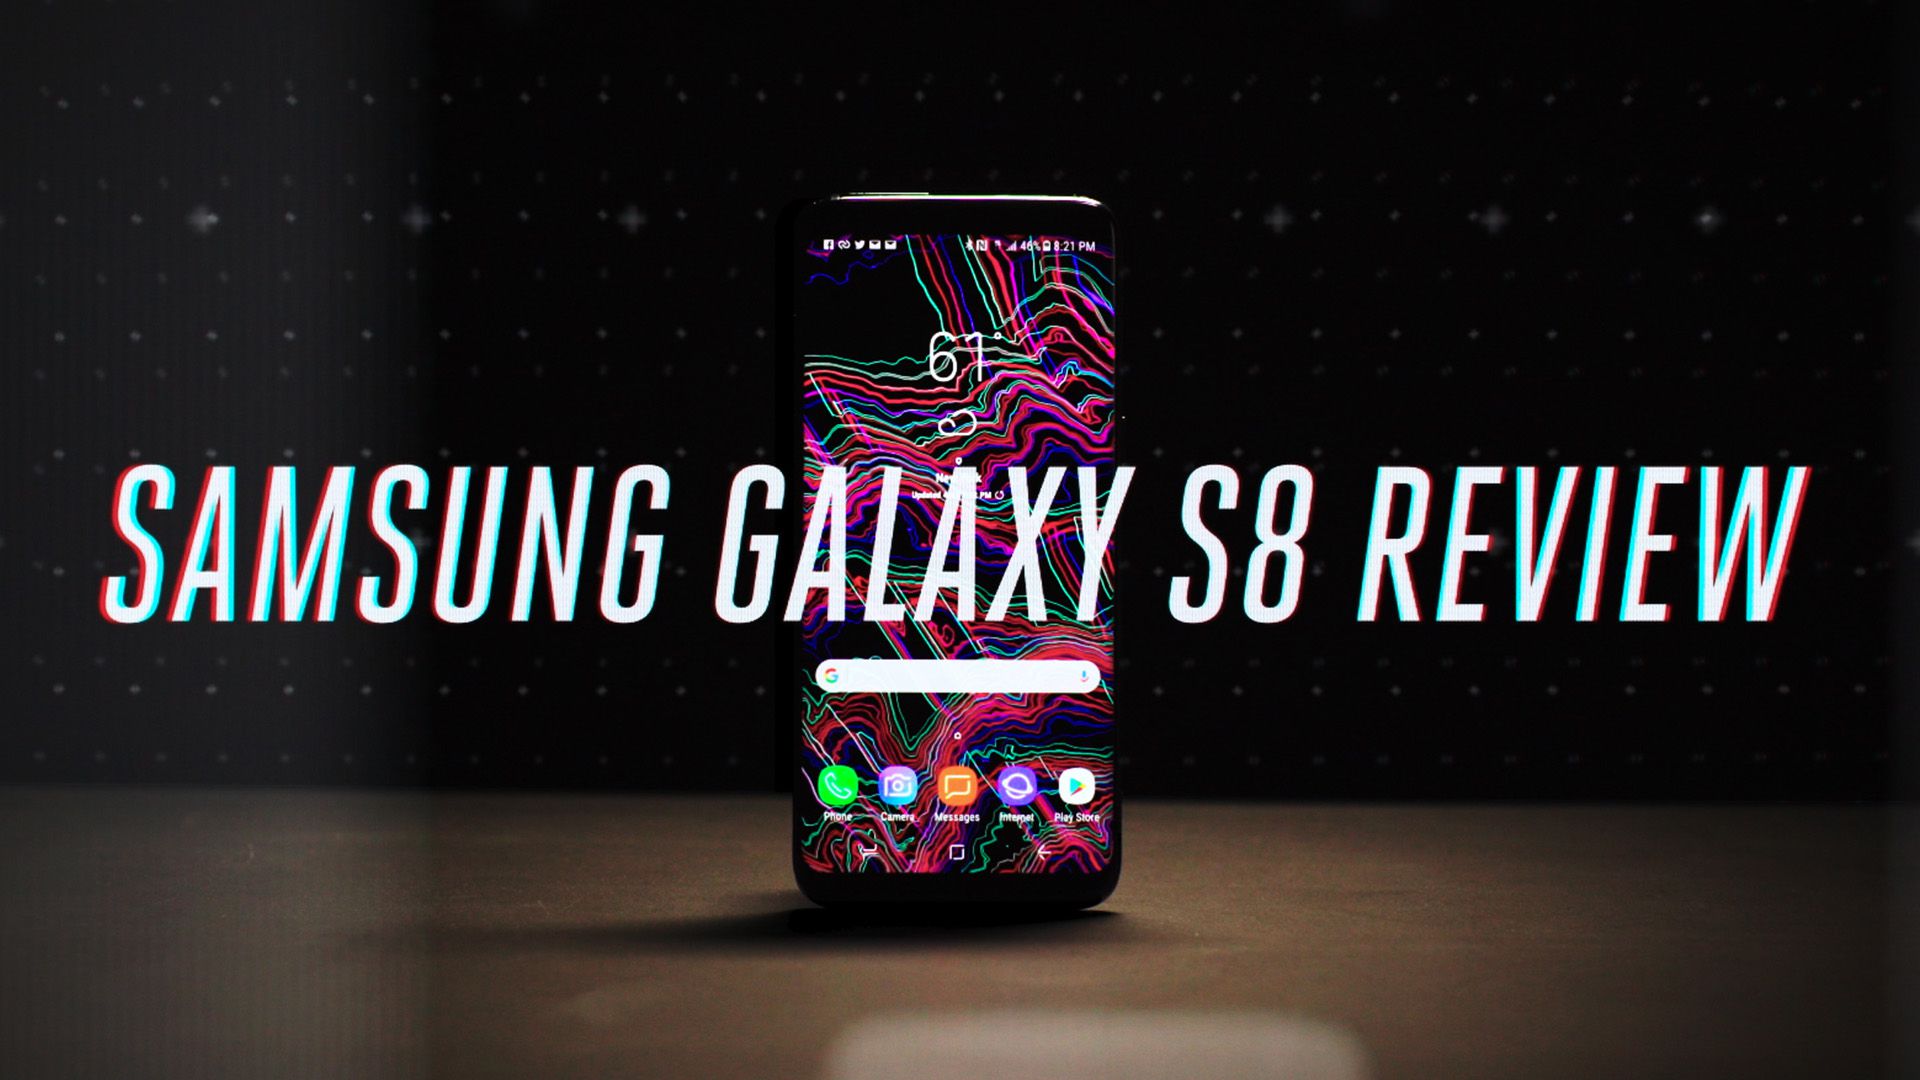 Galaxy S8 Reviews